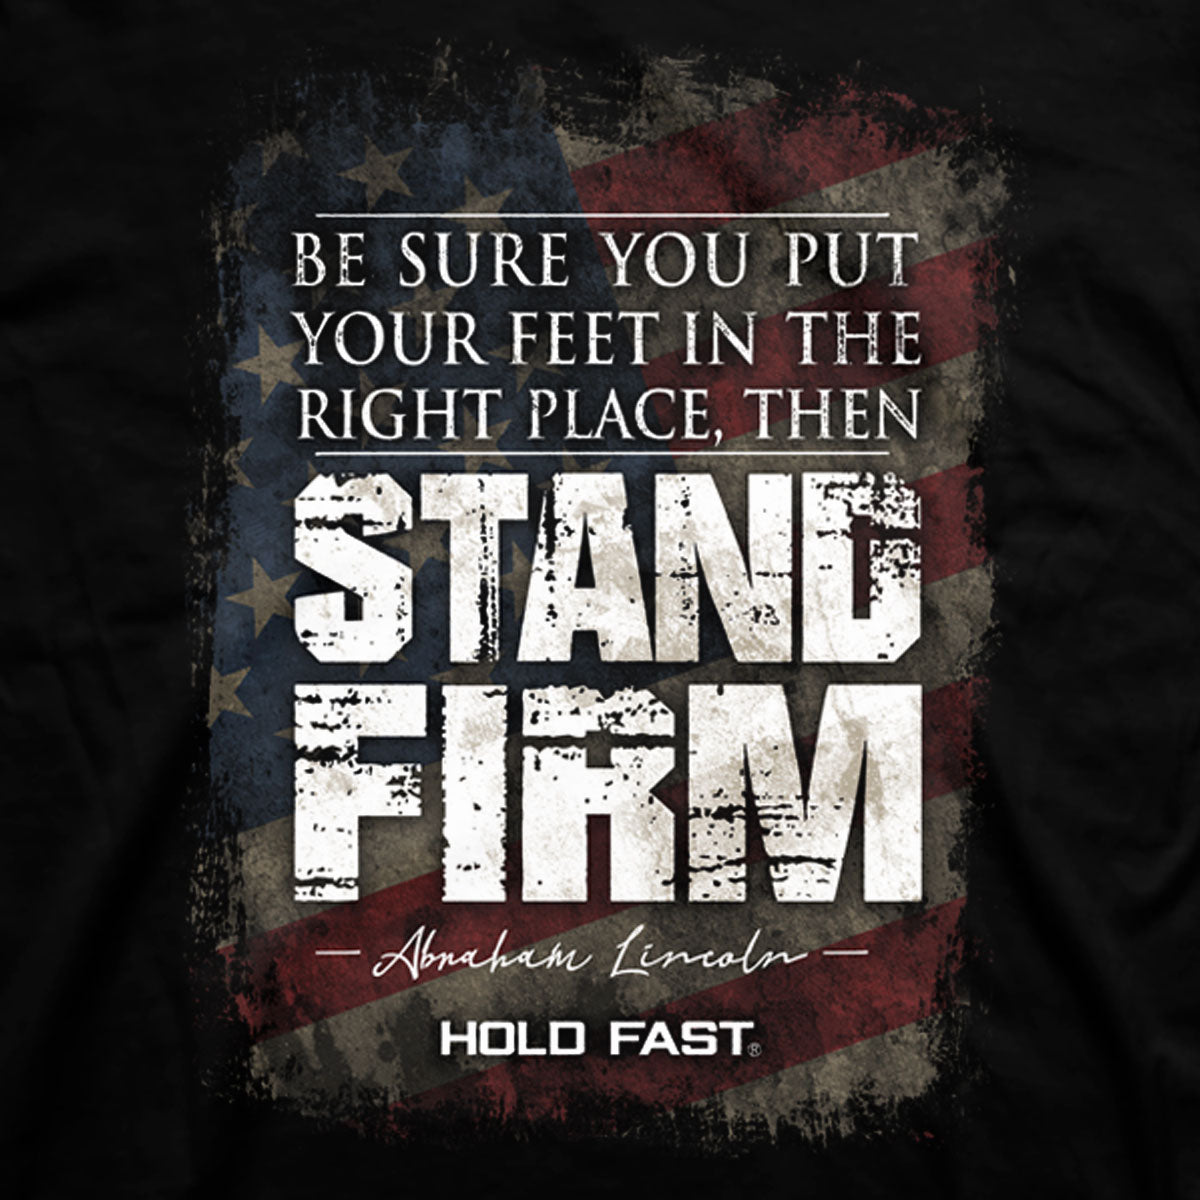 Stand Firm Mens T-Shirt